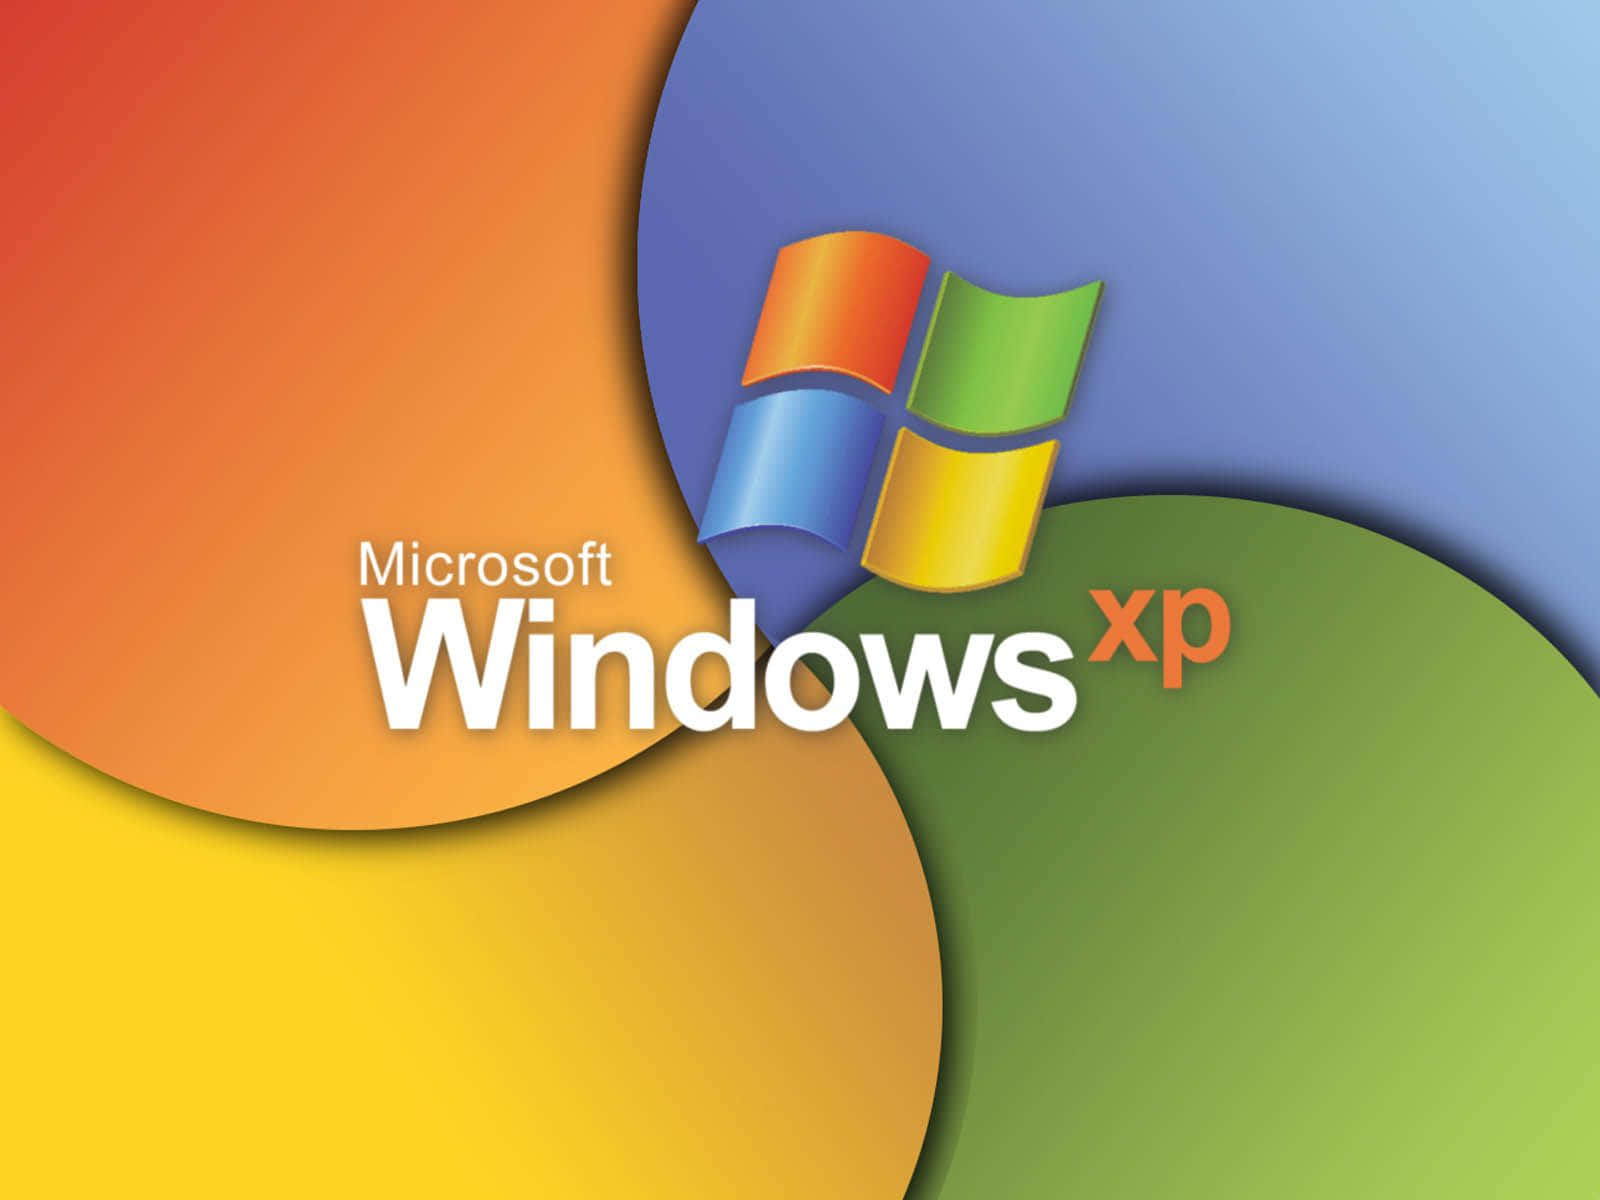 Enjoy the vintage Windows XP Interface